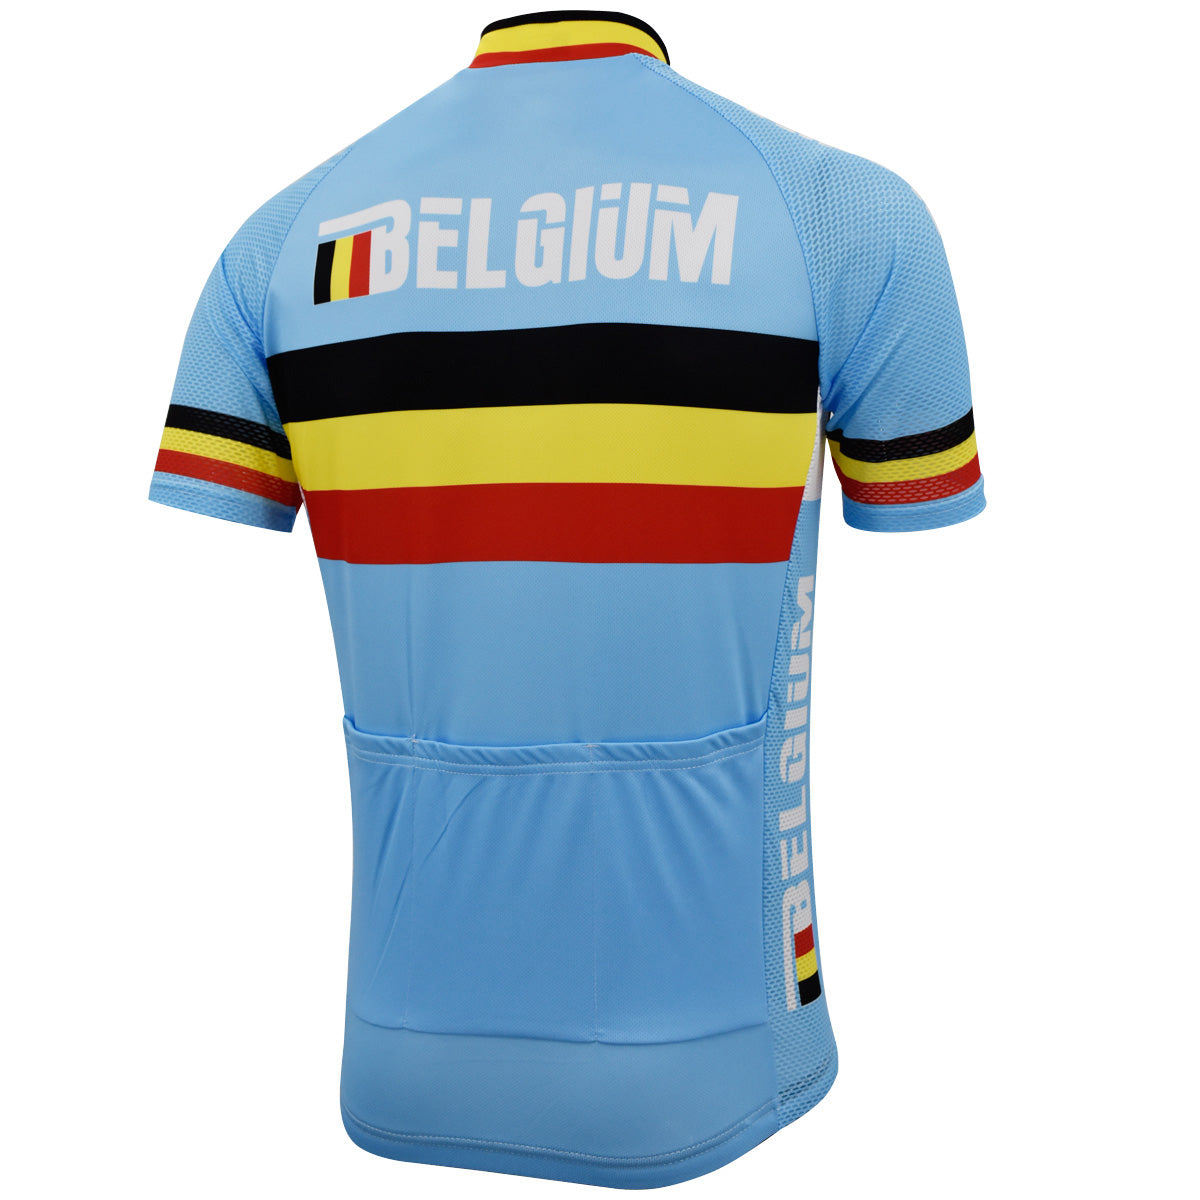 Equipación 2013 Bélgica Ciclismo (Maillot y Culotte con tirantes)